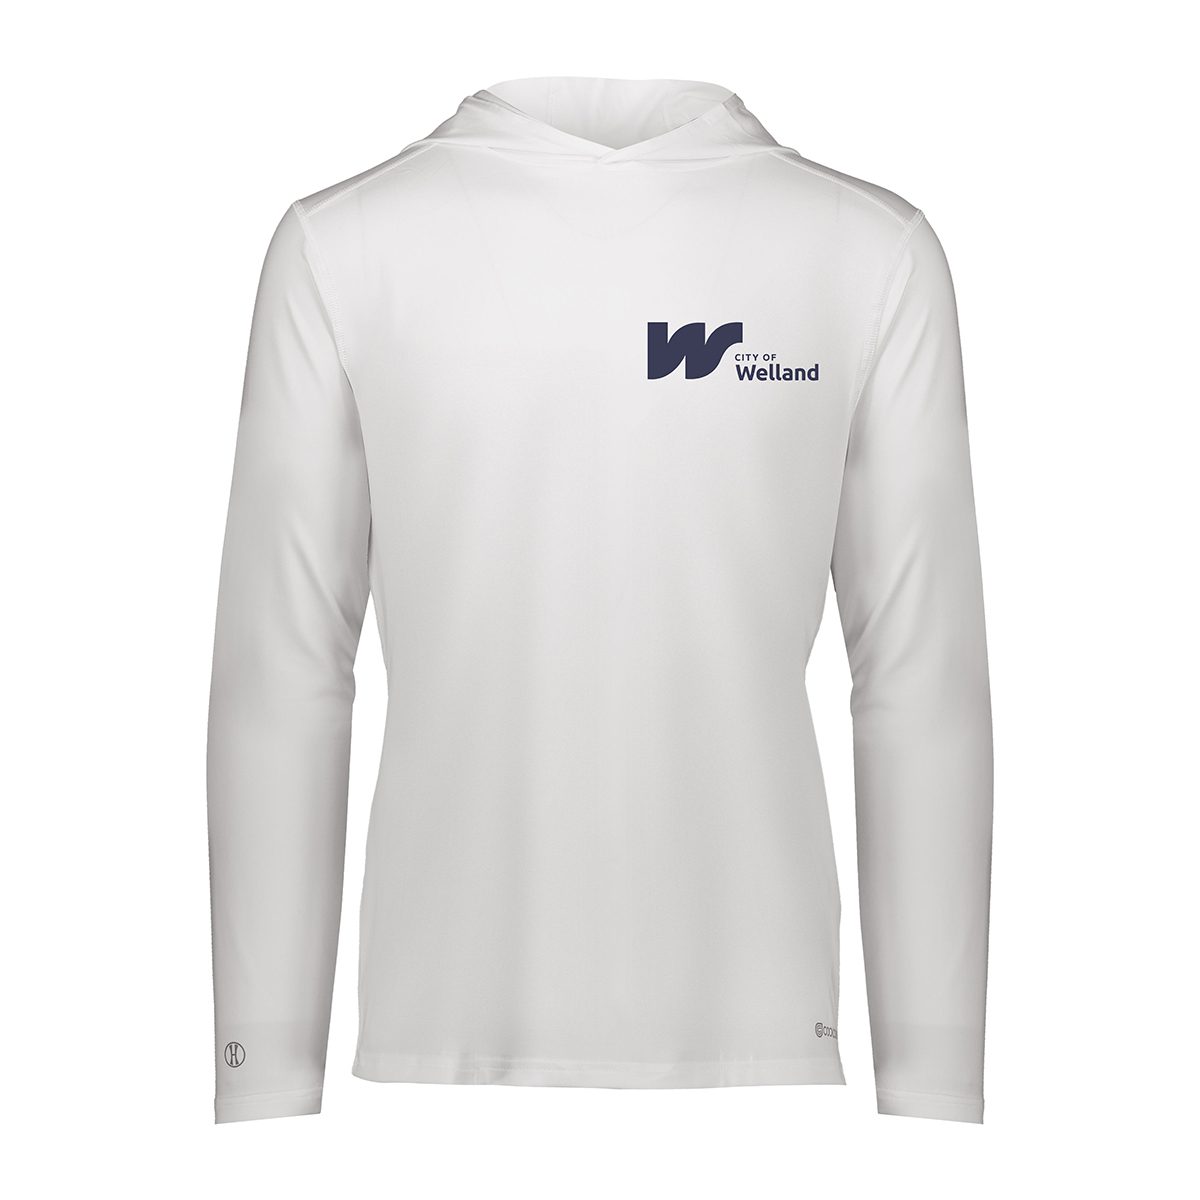 City-of-Welland-Merch-Store_V9-222589-White-Front-Welland-Navy-Logo